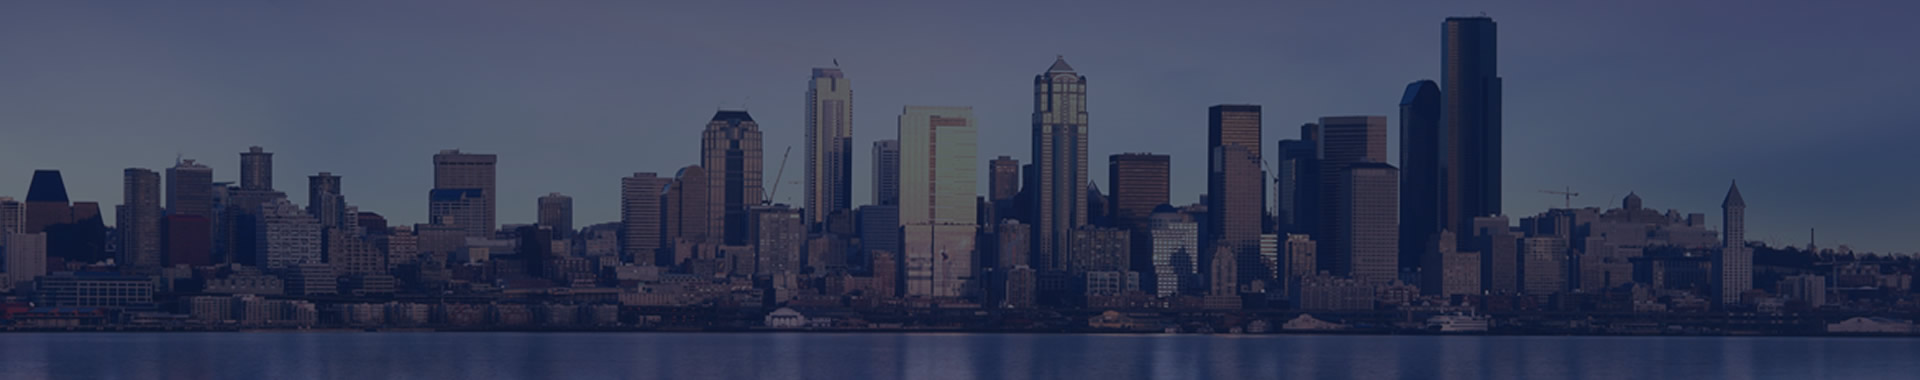 Panoramic photo of Seattle Washington, space needle and city skyline.